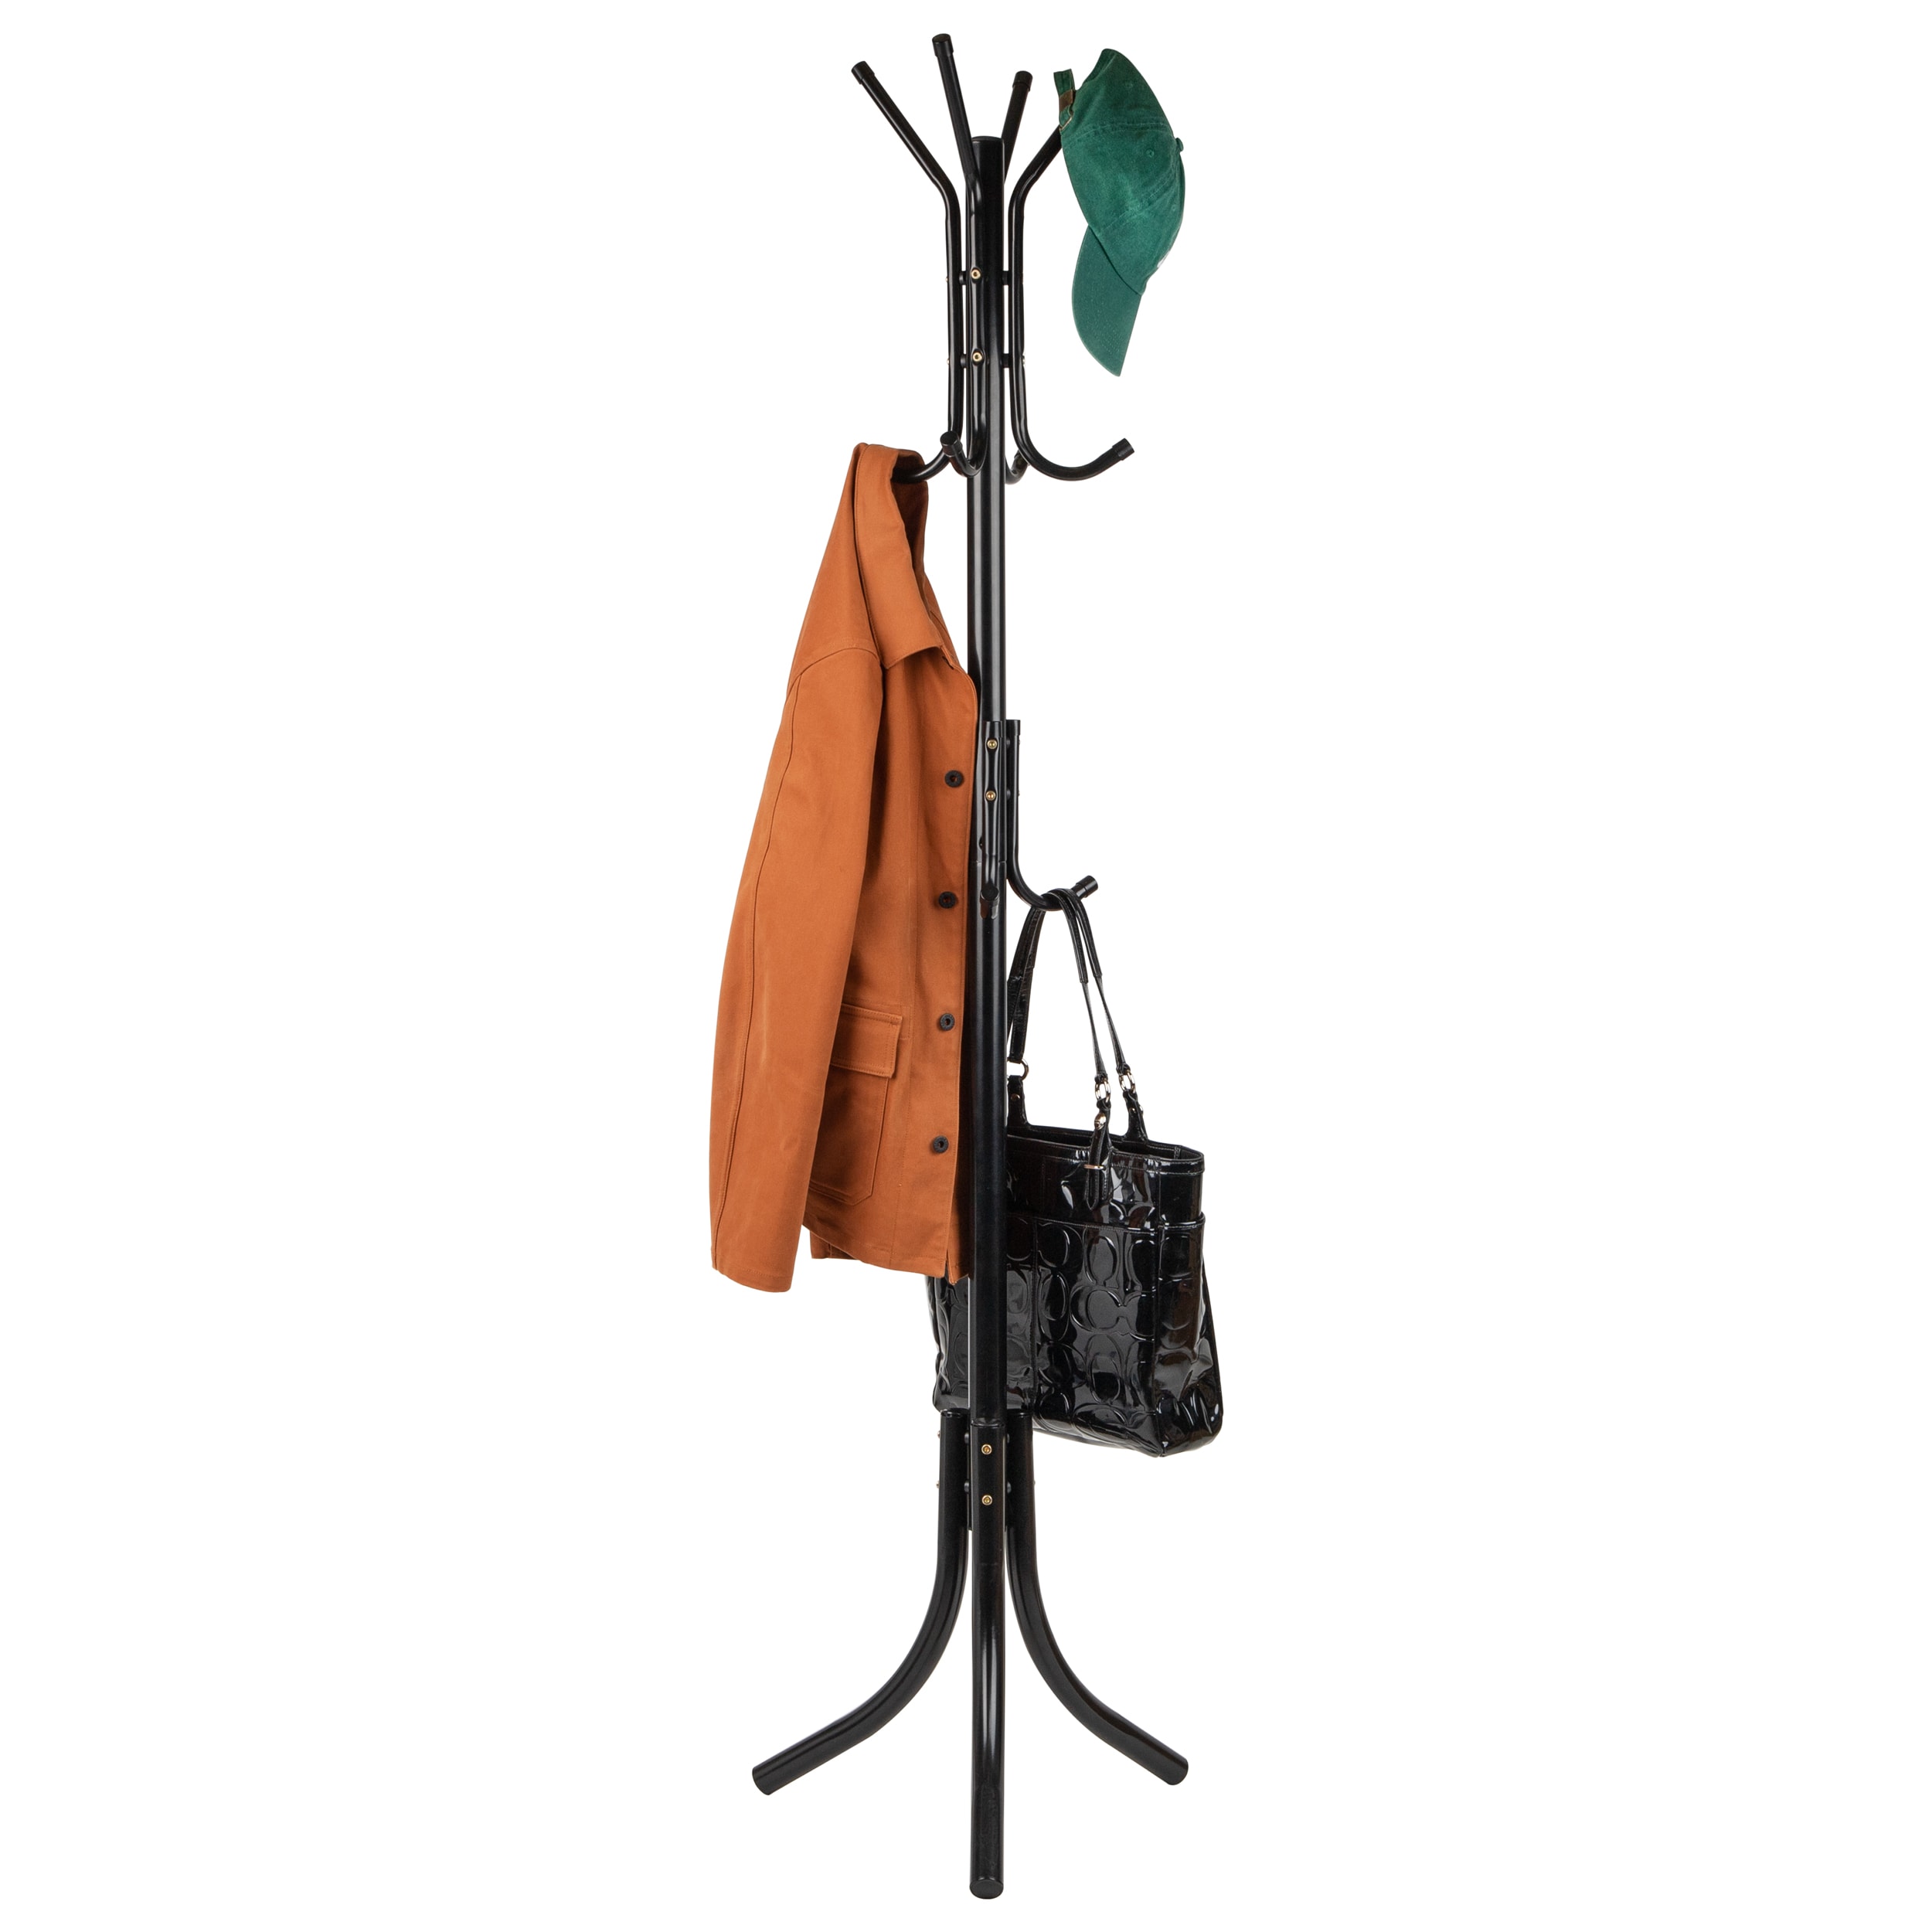 Cobblestone Spiral Purse Rack | Purse display, Handbag display, Purse rack